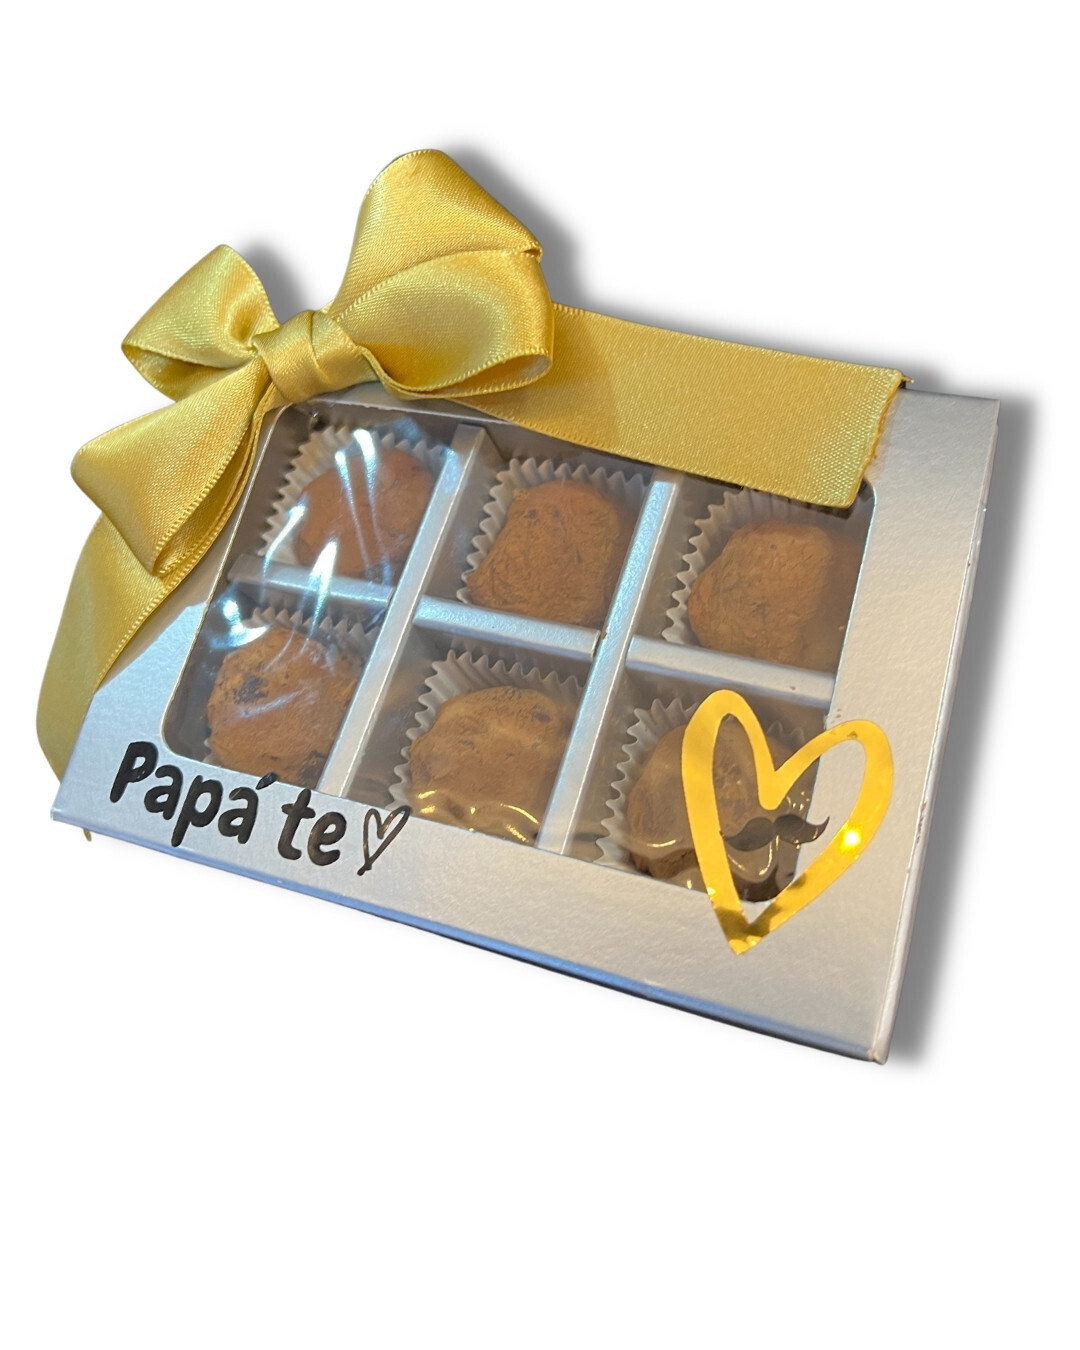 Truffas Casera de Chocolate | Adicional para el dia del padre